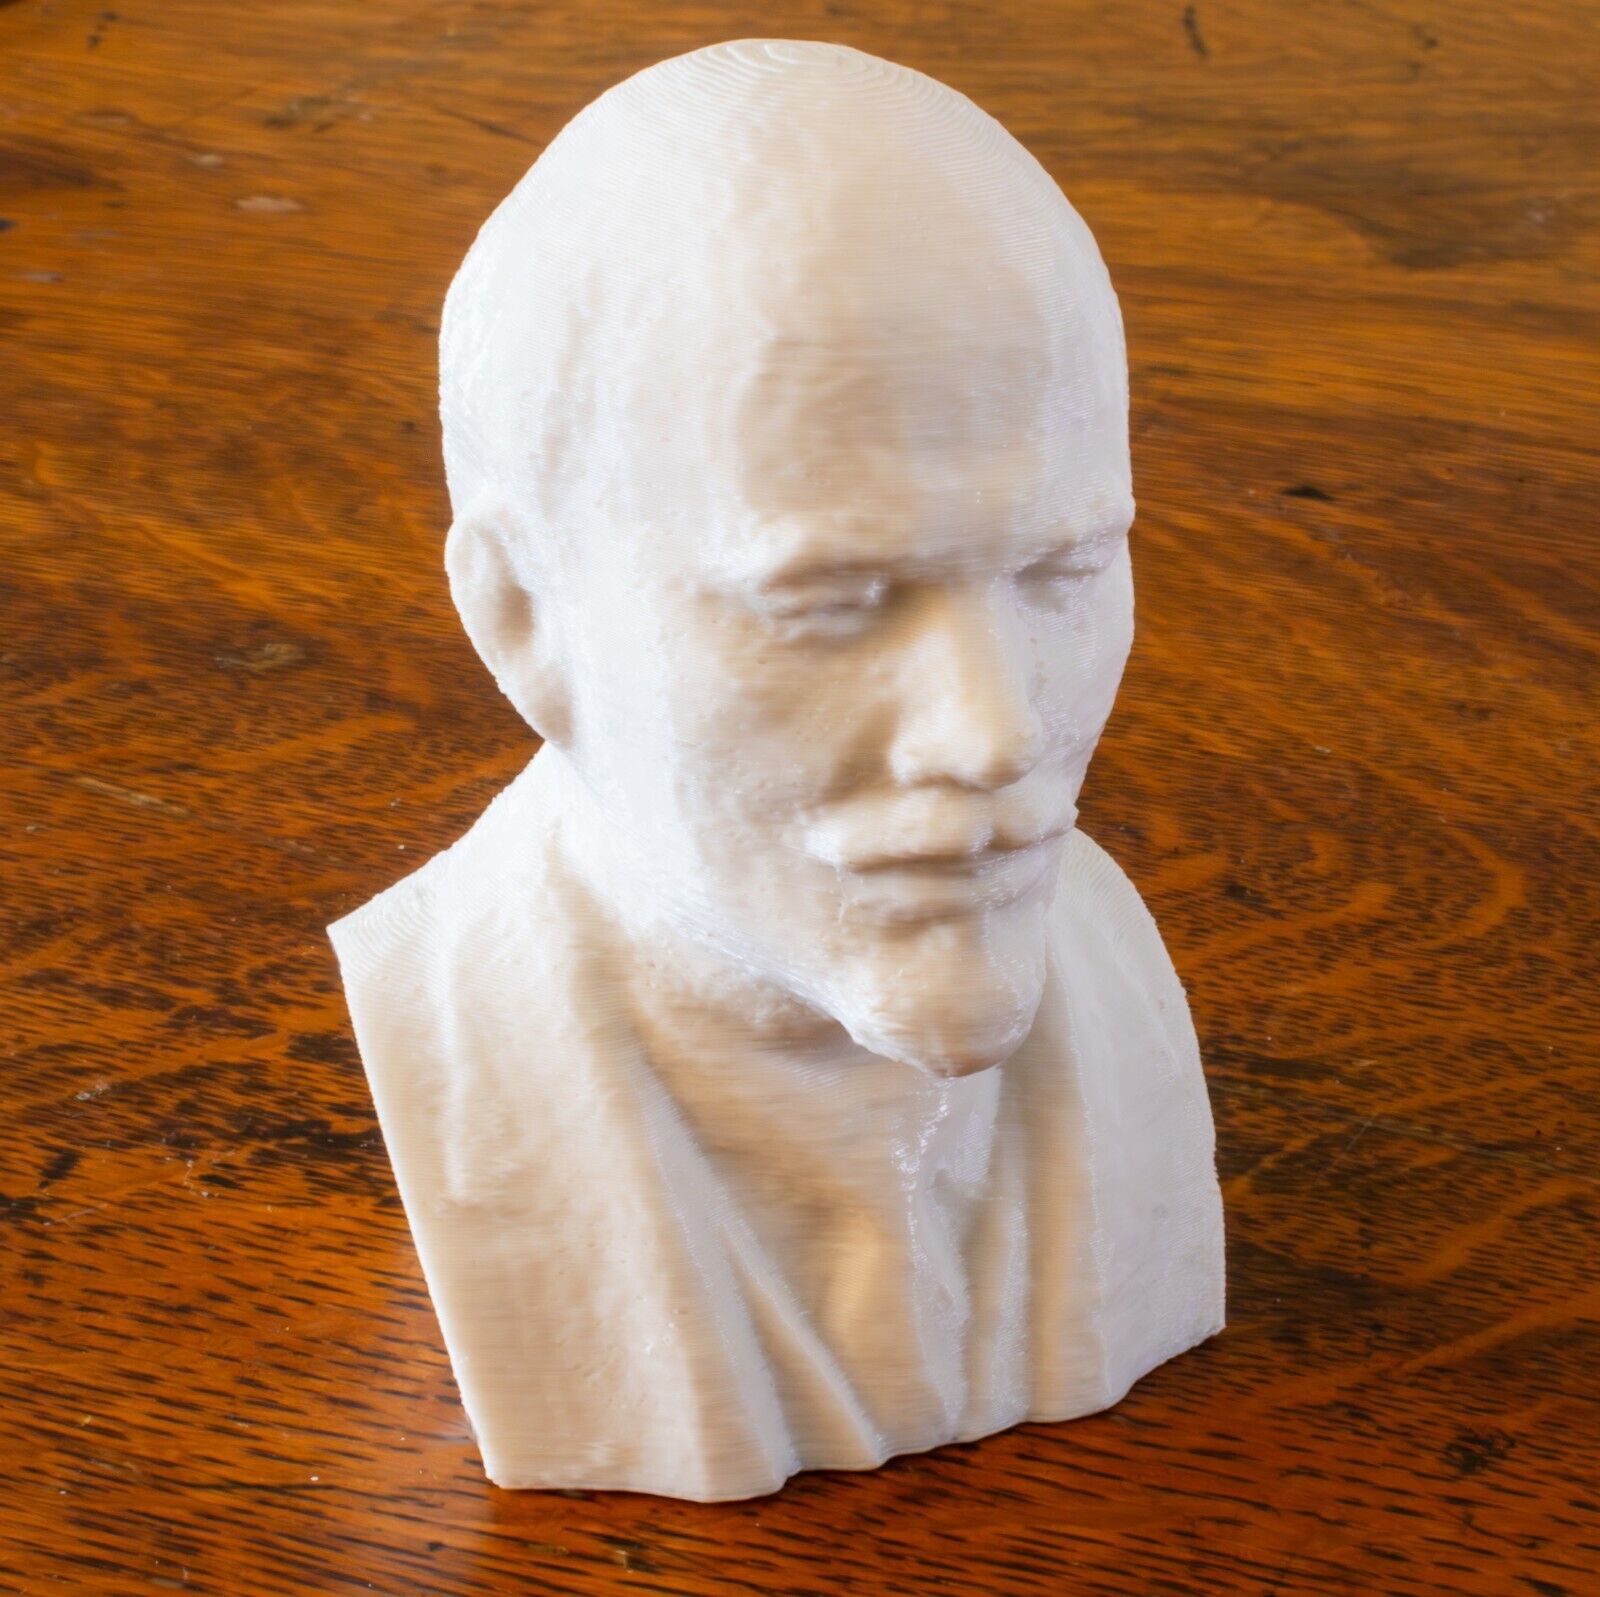 Vladmir Lenin Mini-Bust Statue 3.5 inches tall